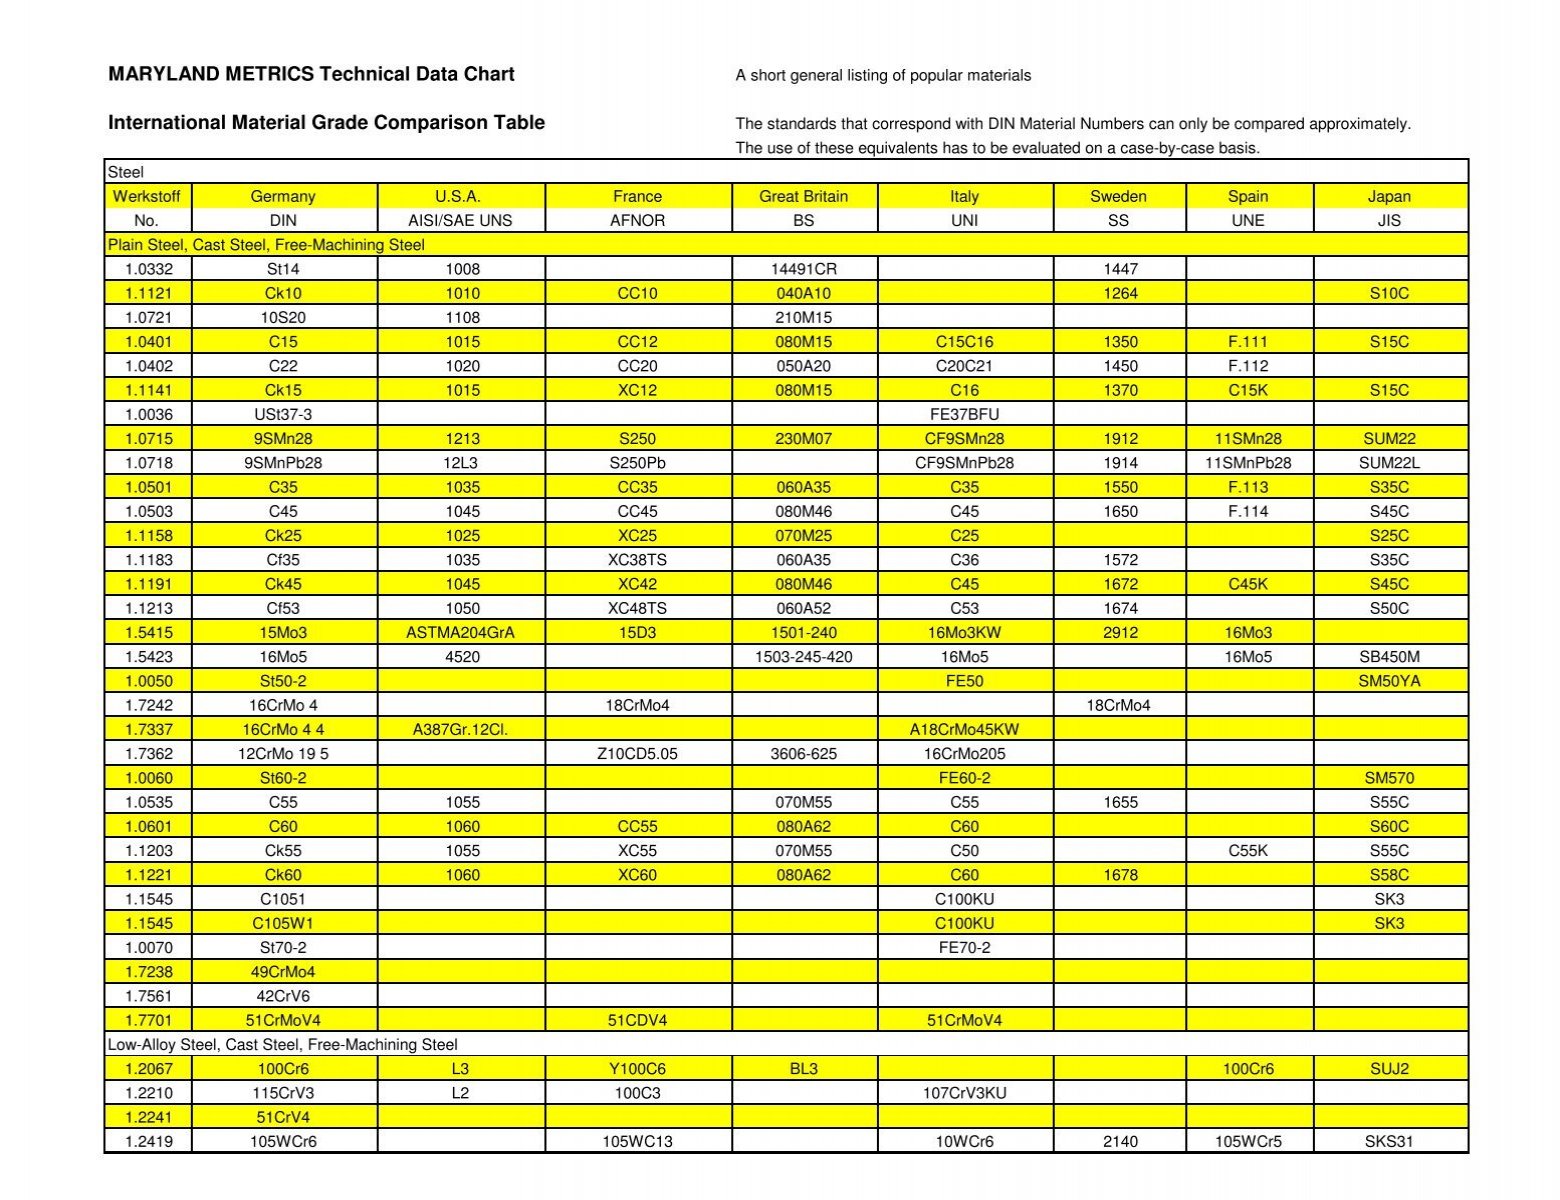 Maryland Metrics Technical Data Chart